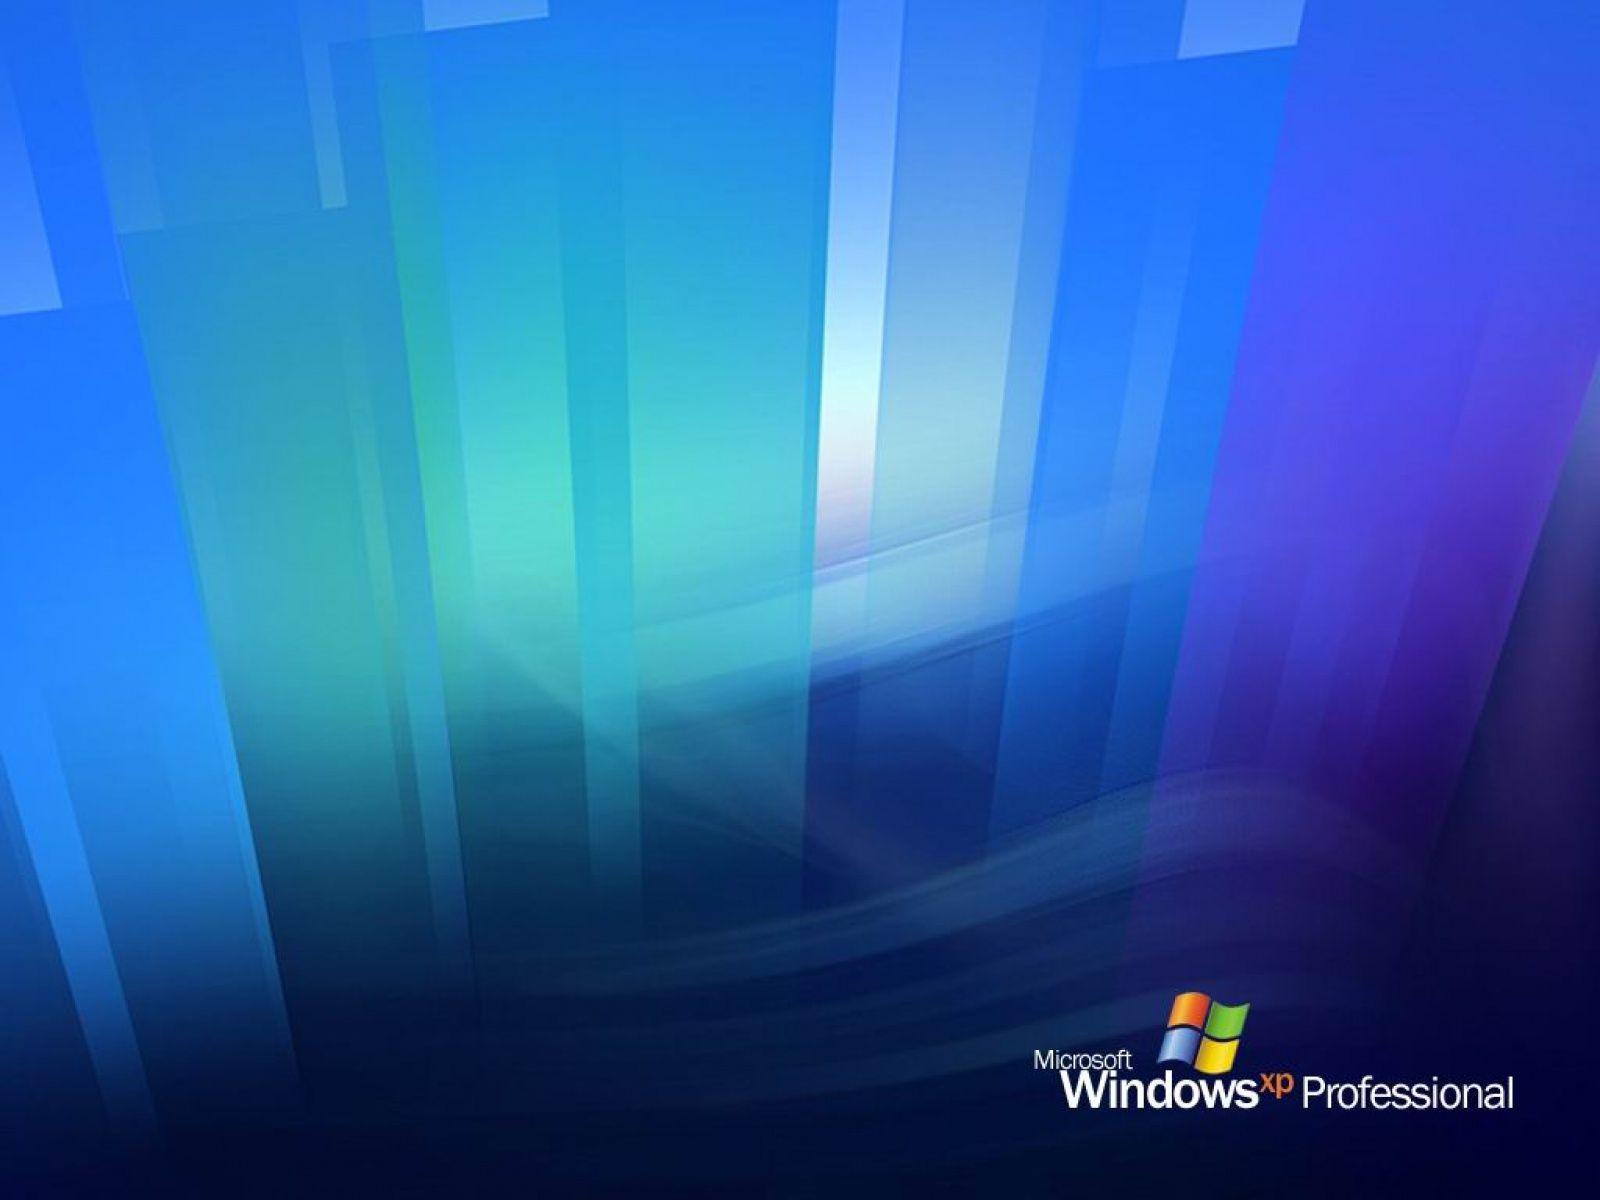 Wallpaper For > Windows Xp Professional Wallpaper